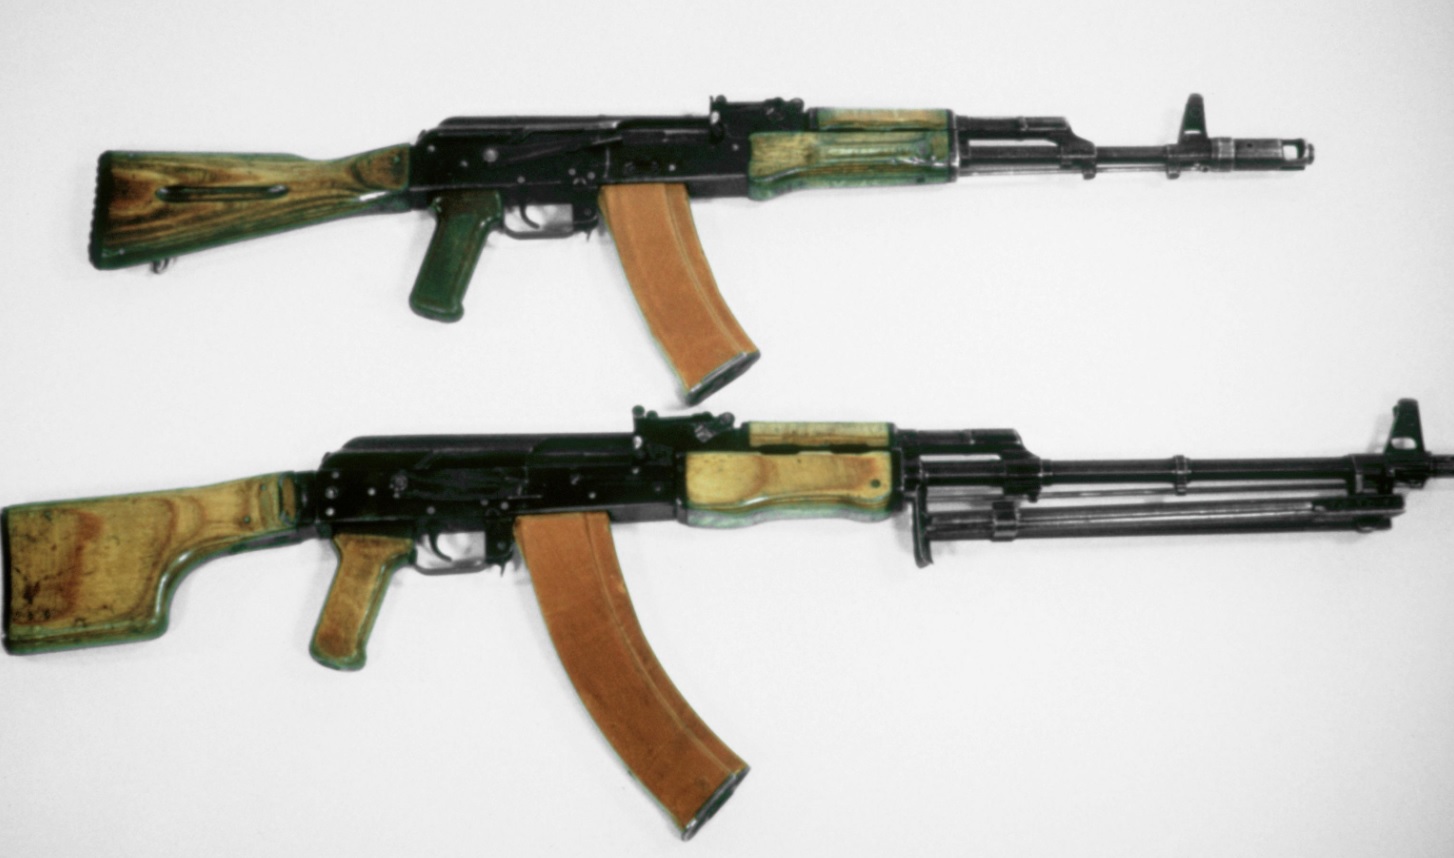 French weapons sales to Saudi jumped sharply despite Khashoggi row